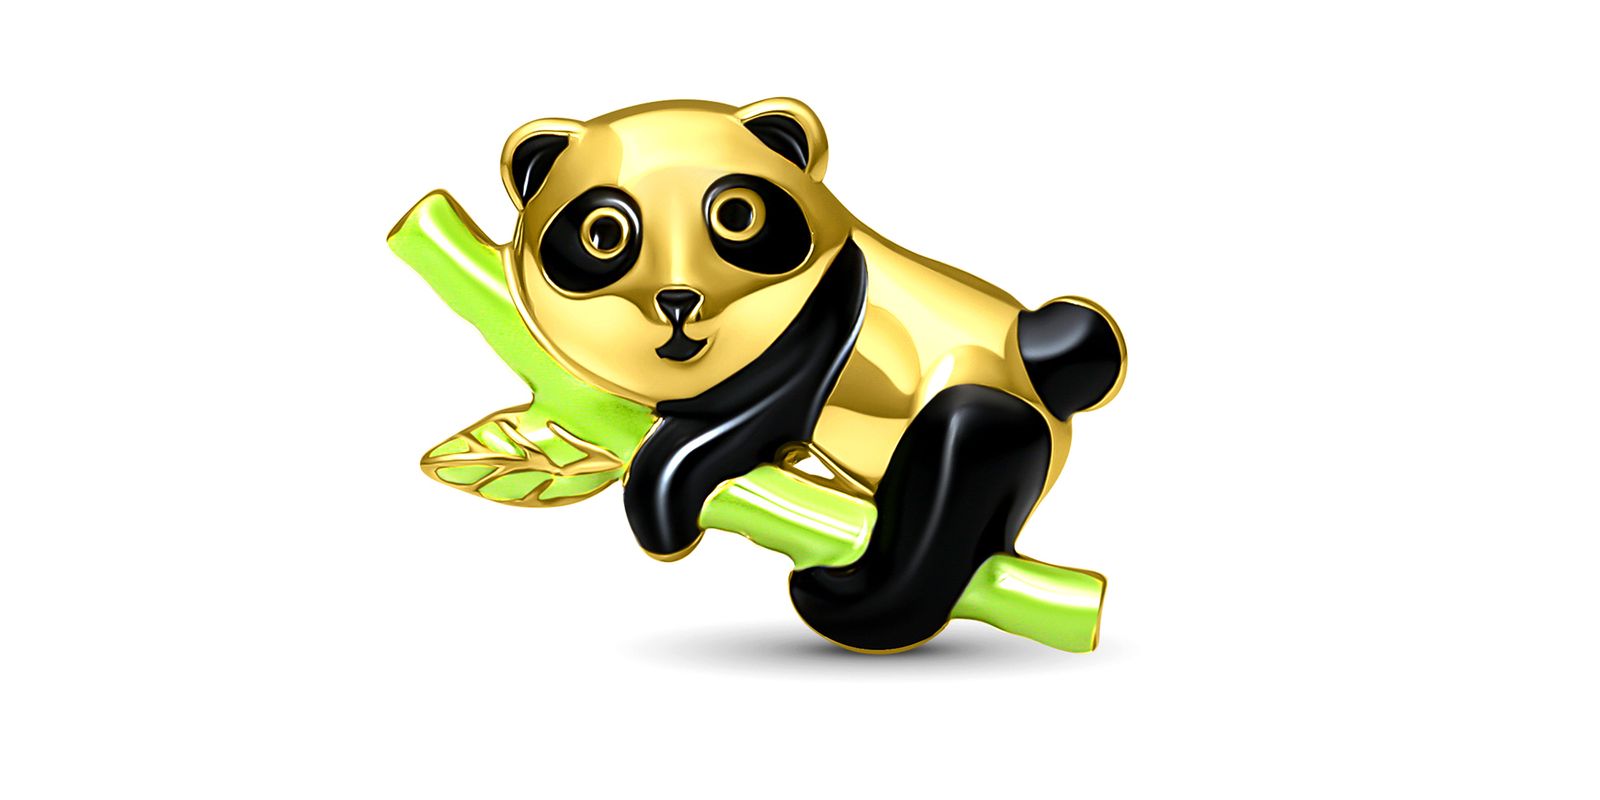 My gold panda